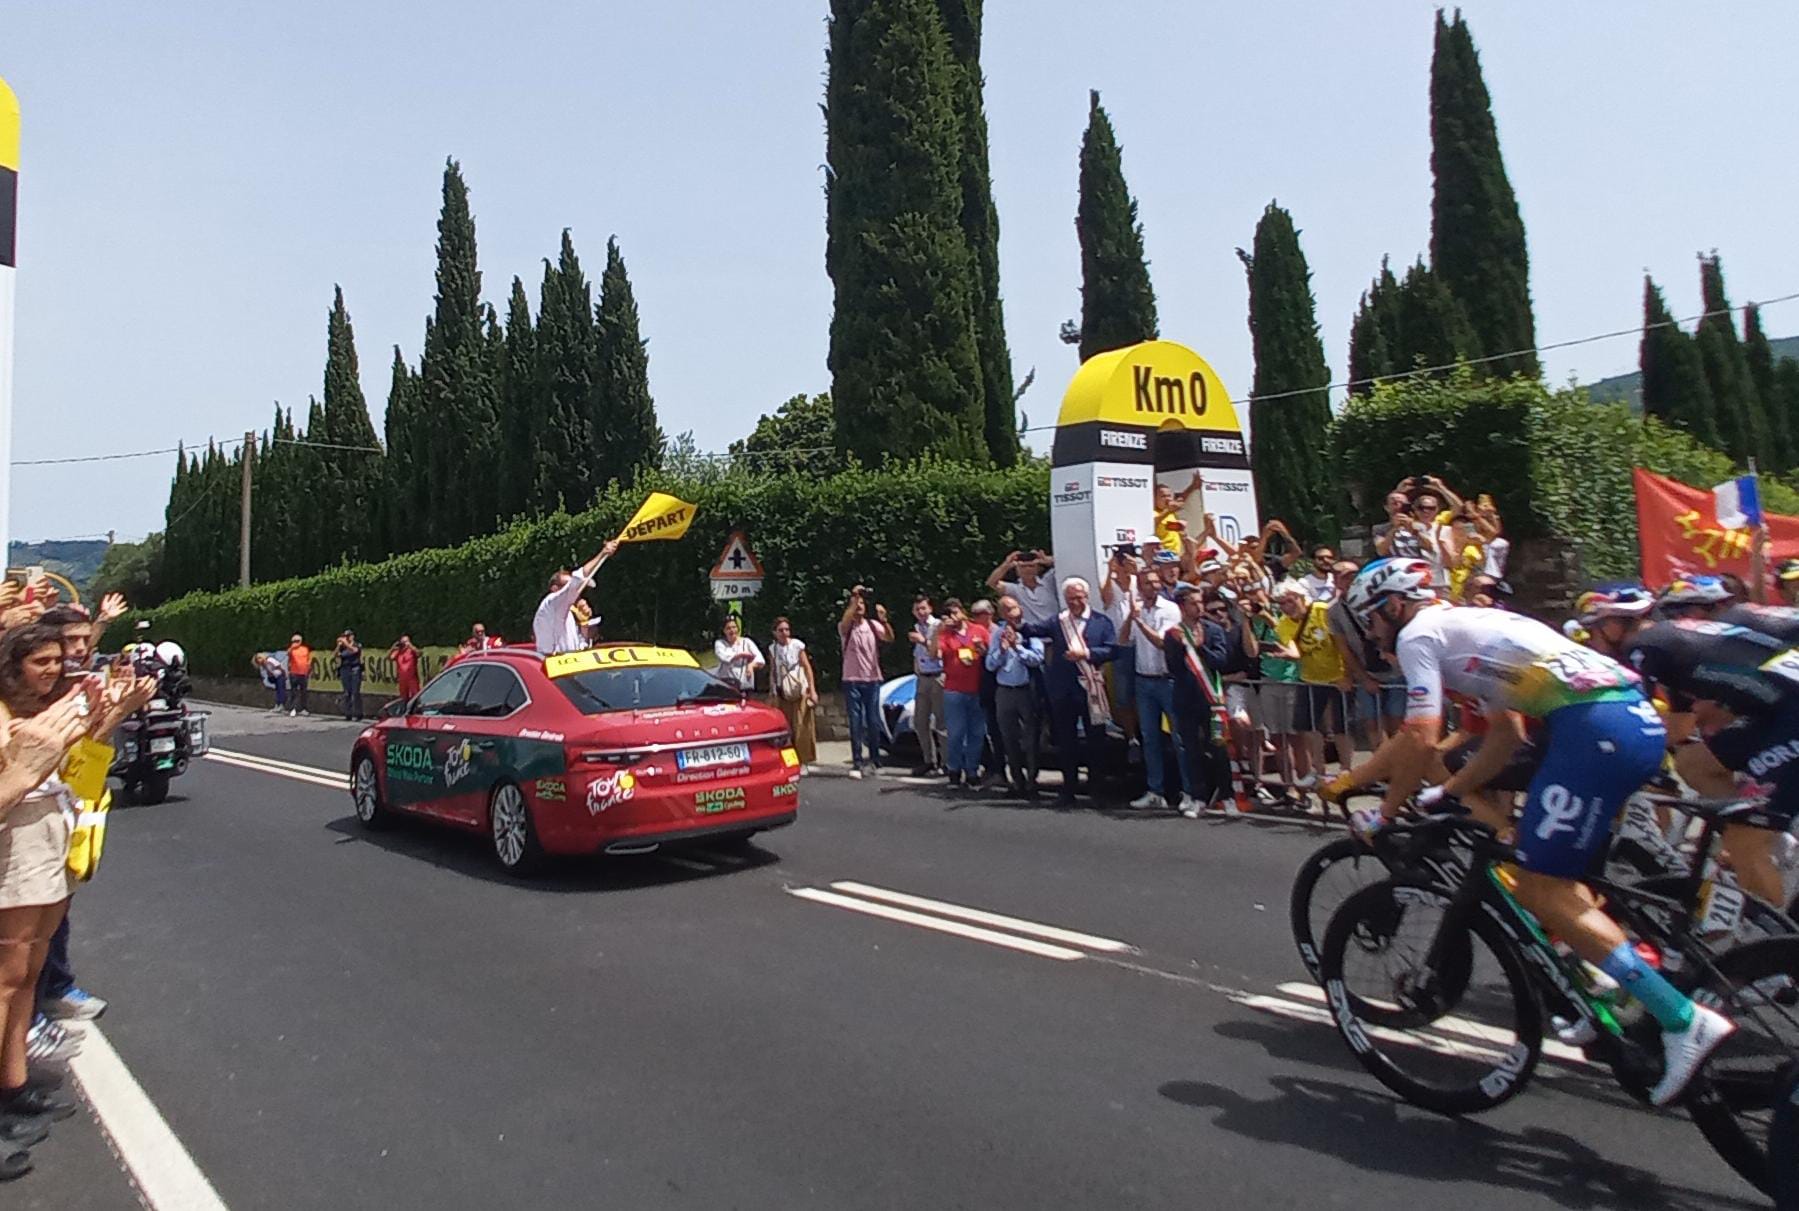 Tour de France, Giani alla partenza: “La Toscana vive una grande fes...